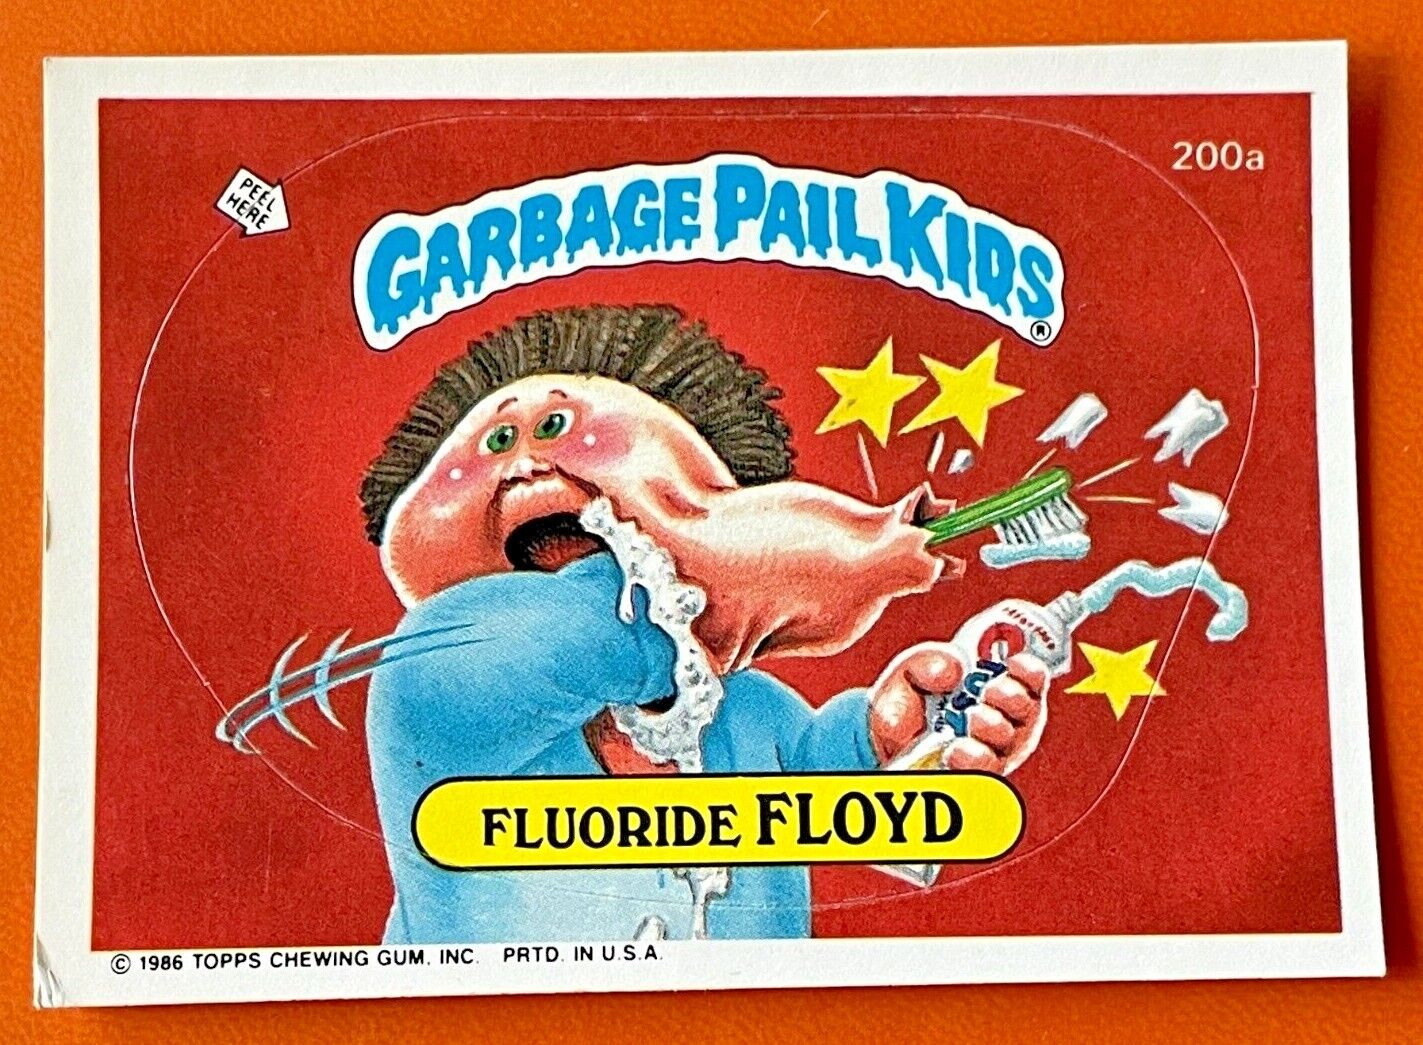 1986 Topps OS5 Garbage Pail Kids 200a FLUORIDE FLOYD Trading Card DIECUT ERROR